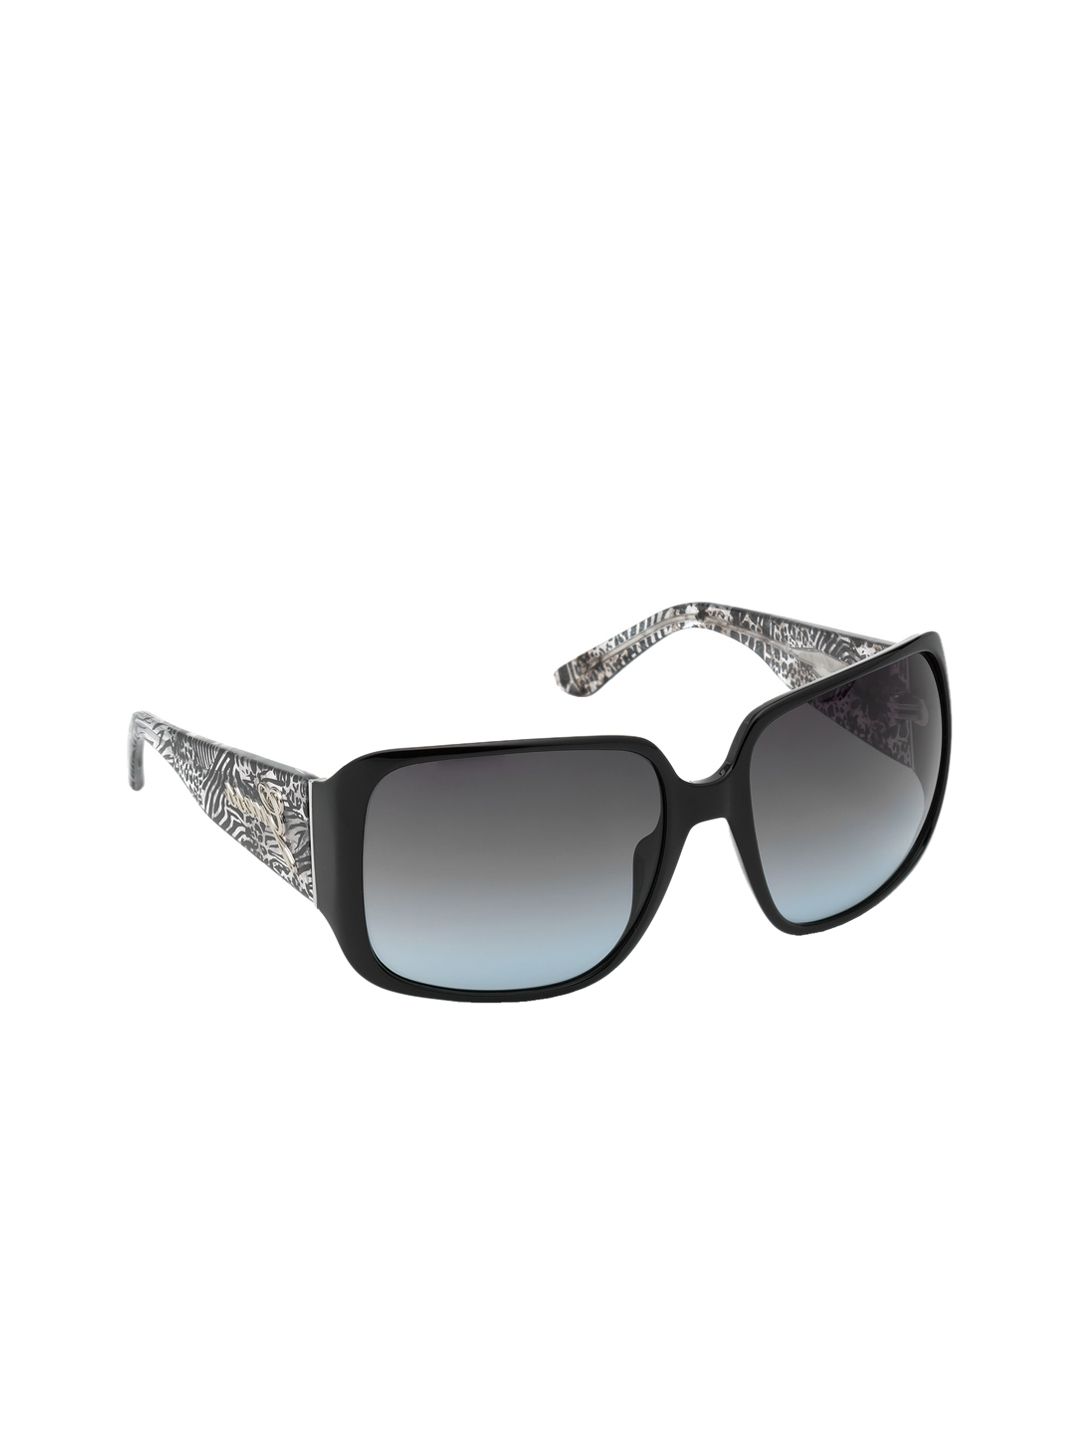 Guess Women Grey Lens & Black UV Protected Square Sunglasses GU7682 62 01B Price in India